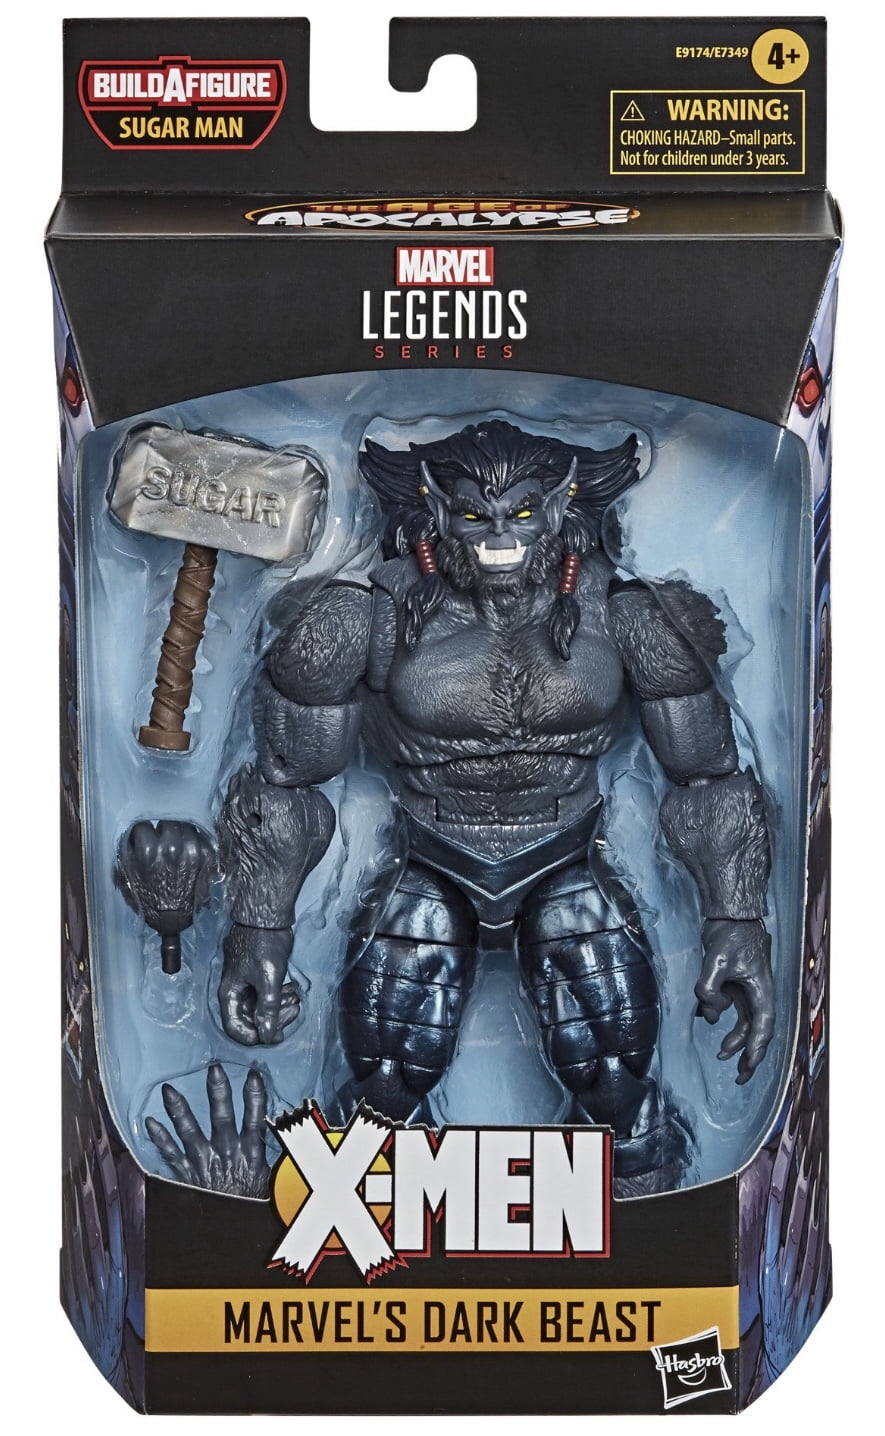 Marvel Legends Retro Beast Grey The Uncanny X-men 6in on Card for sale online 